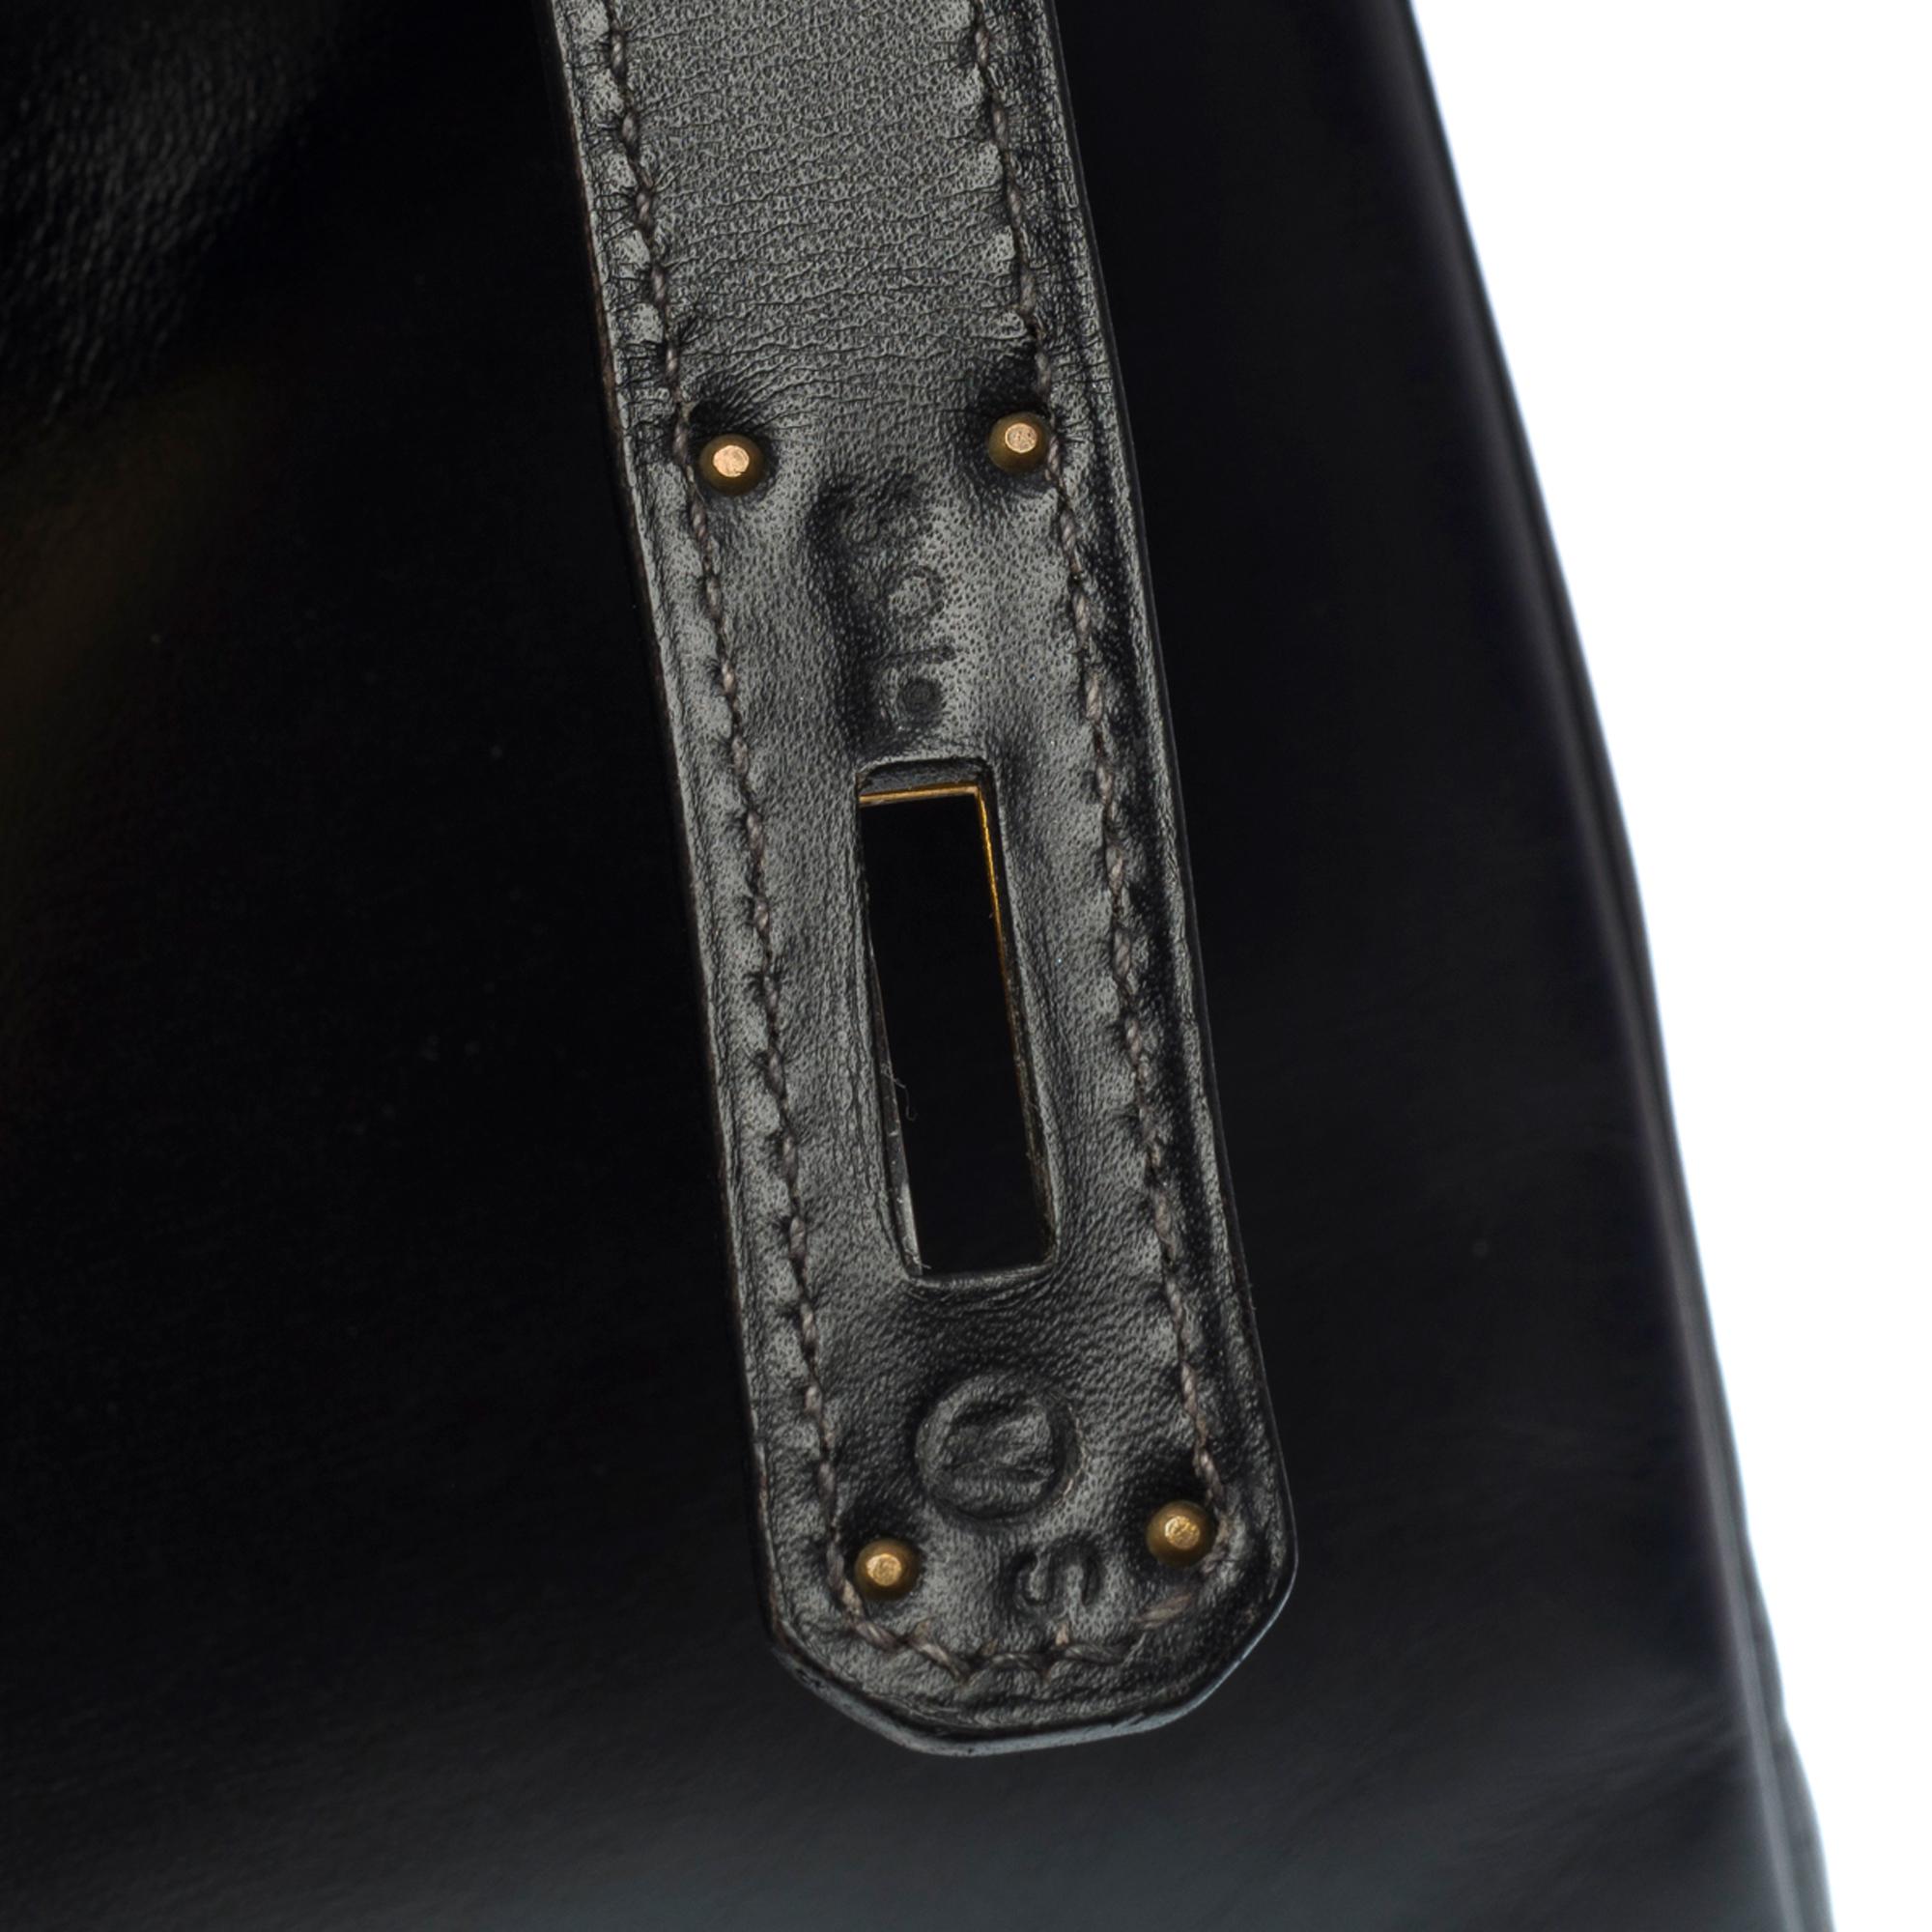 Hermès Kelly 35 retourne handbag strap in black box calfskin leather, GHW 5